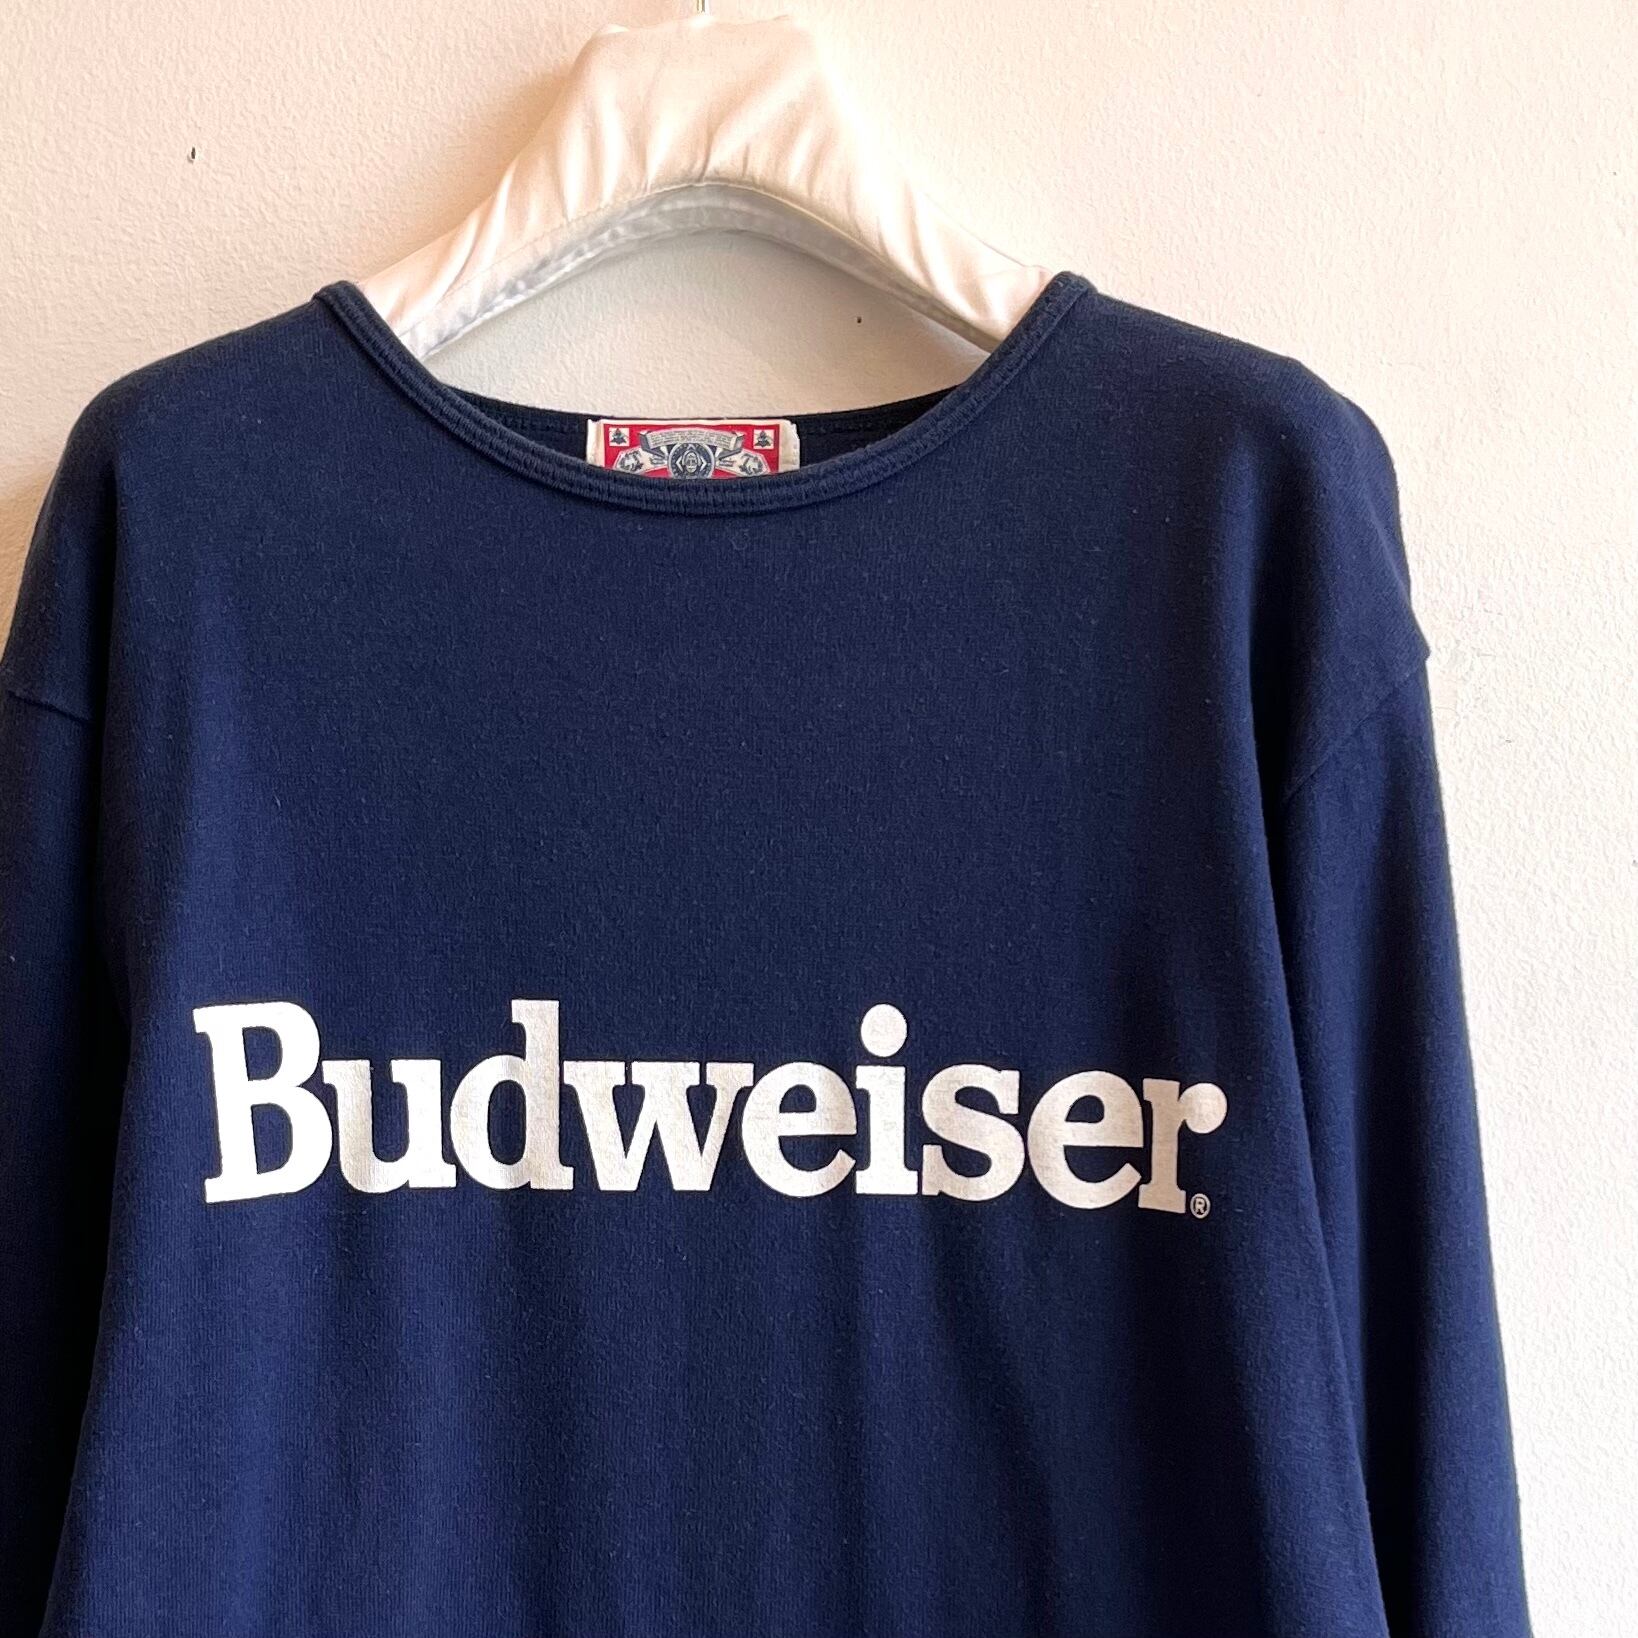 Budwiser バドワイザー 長袖Tシャツ ロンT スリーブプリント 00s - Tシャツ